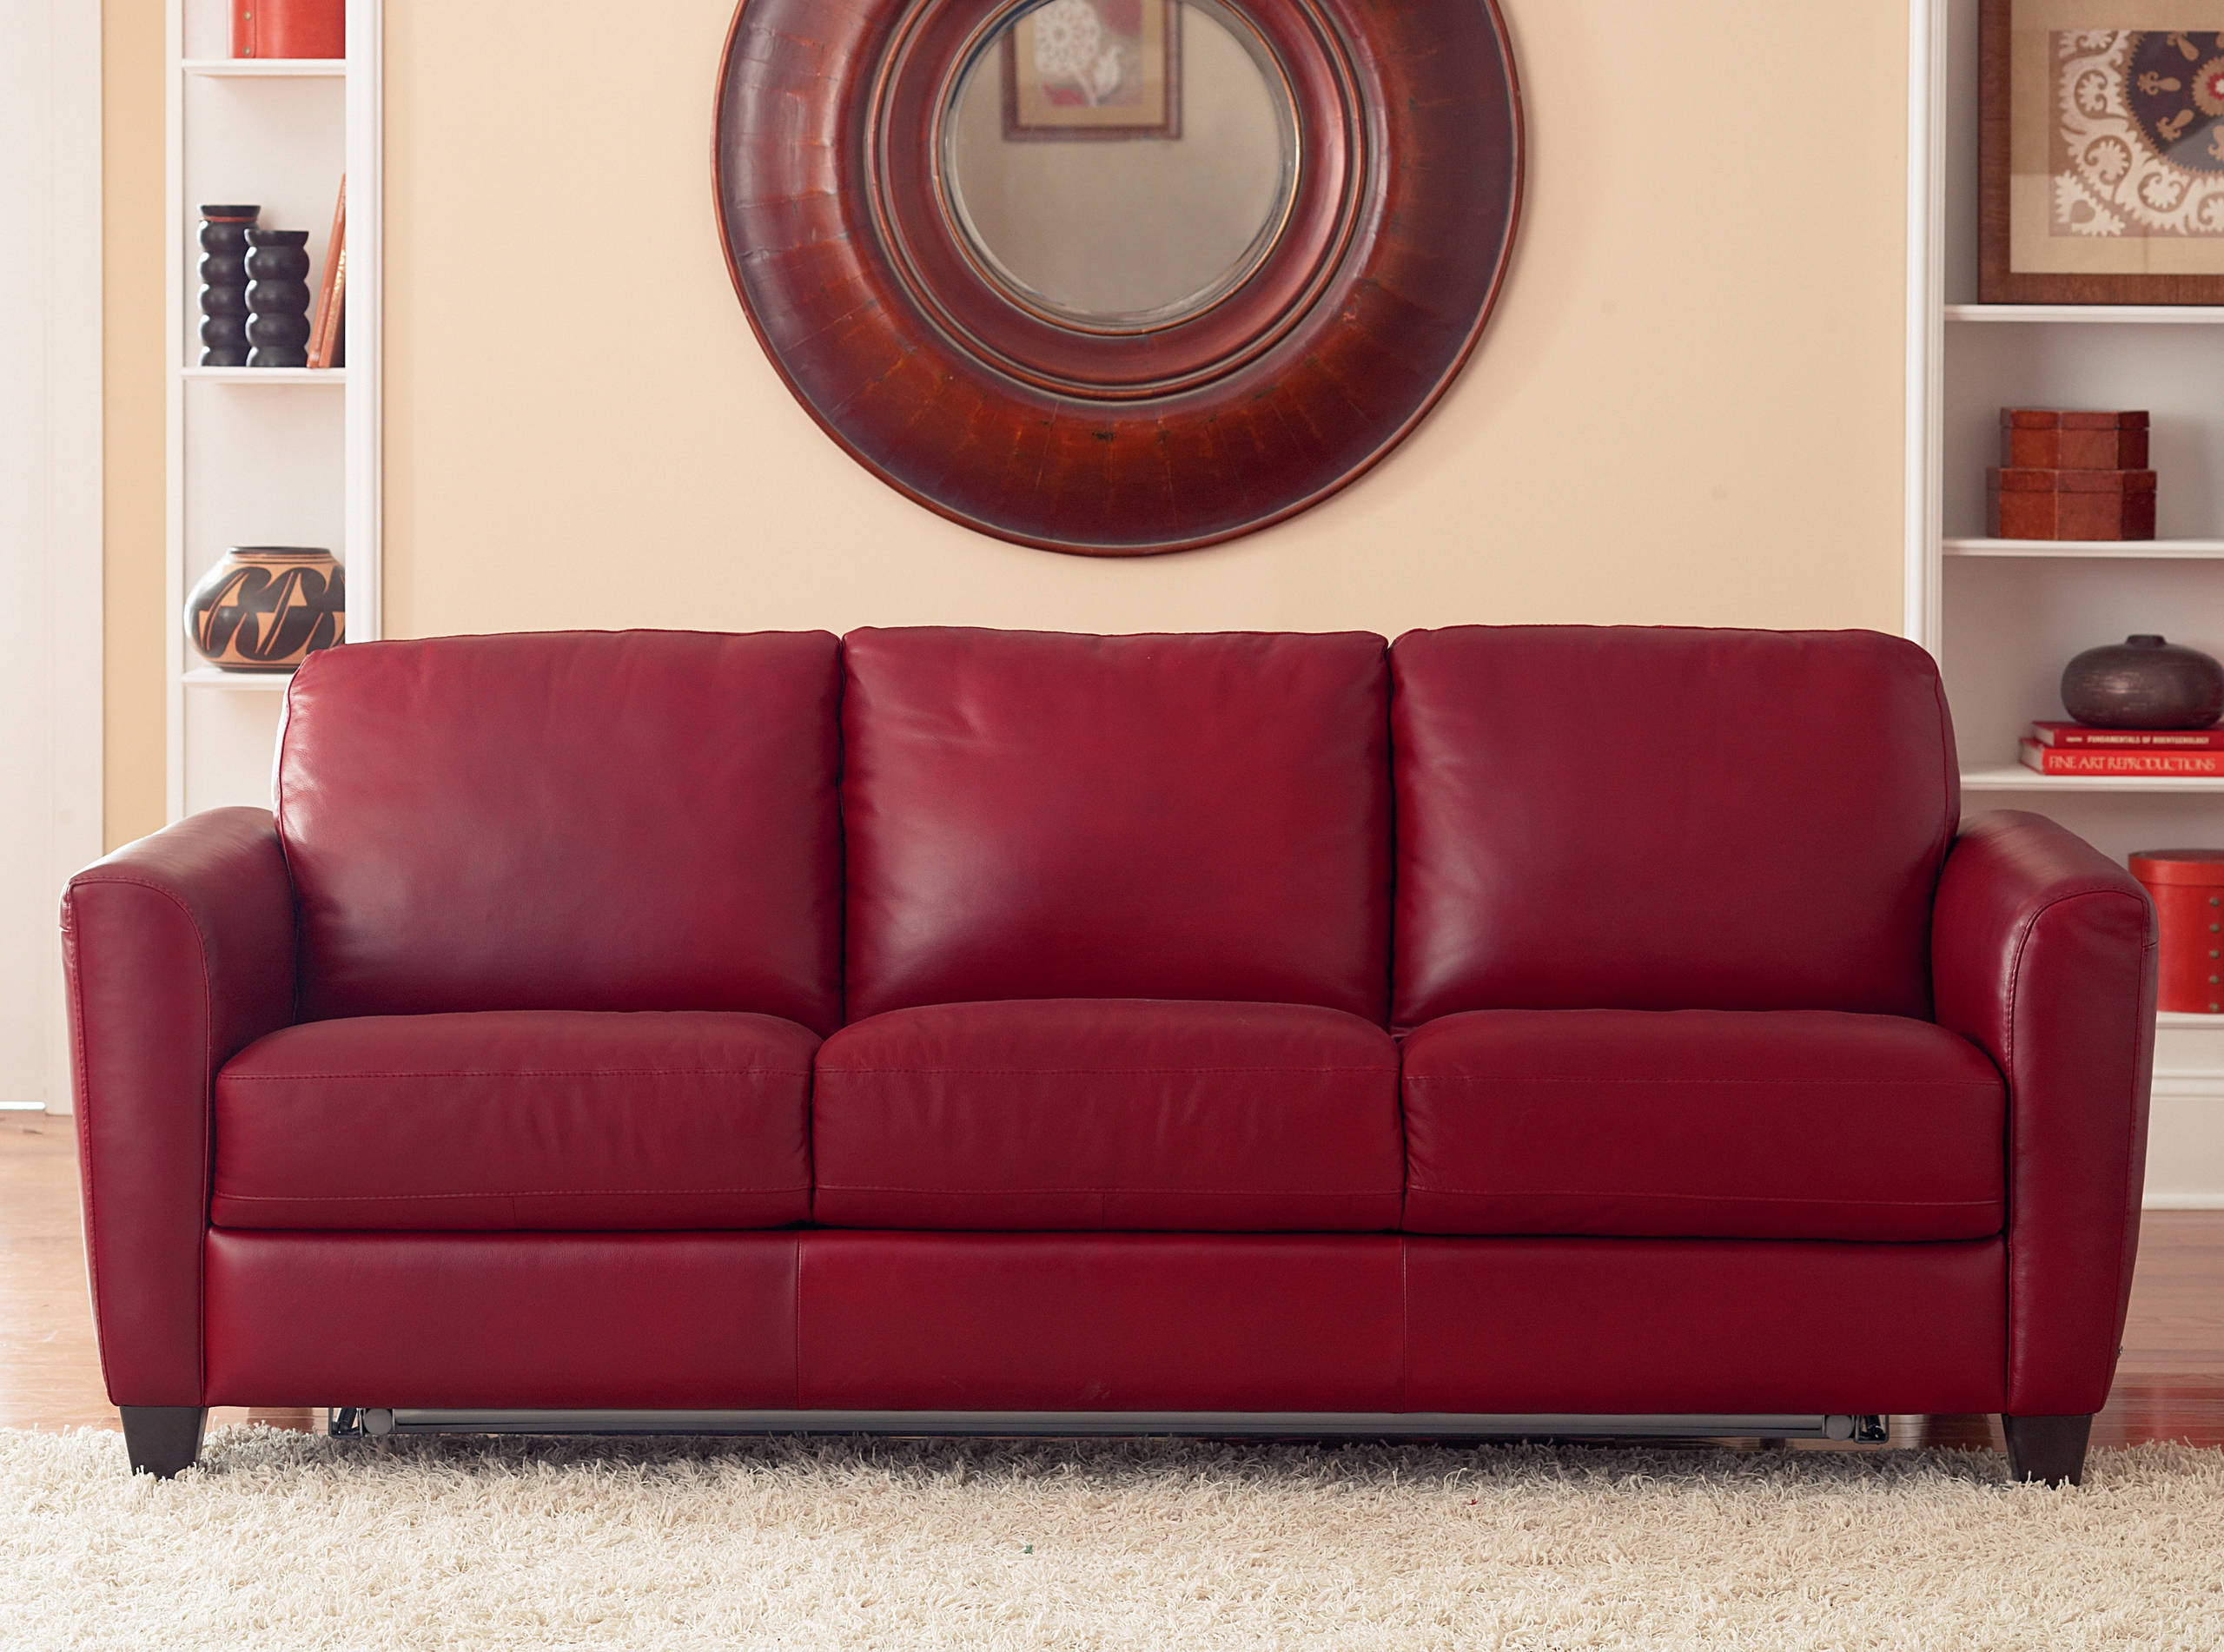 Queen Sleeper Sofa Lino B592 by Natuzzi Editions - Modern - Living Room -  New York - by MIG Furniture Design, Inc. | Houzz